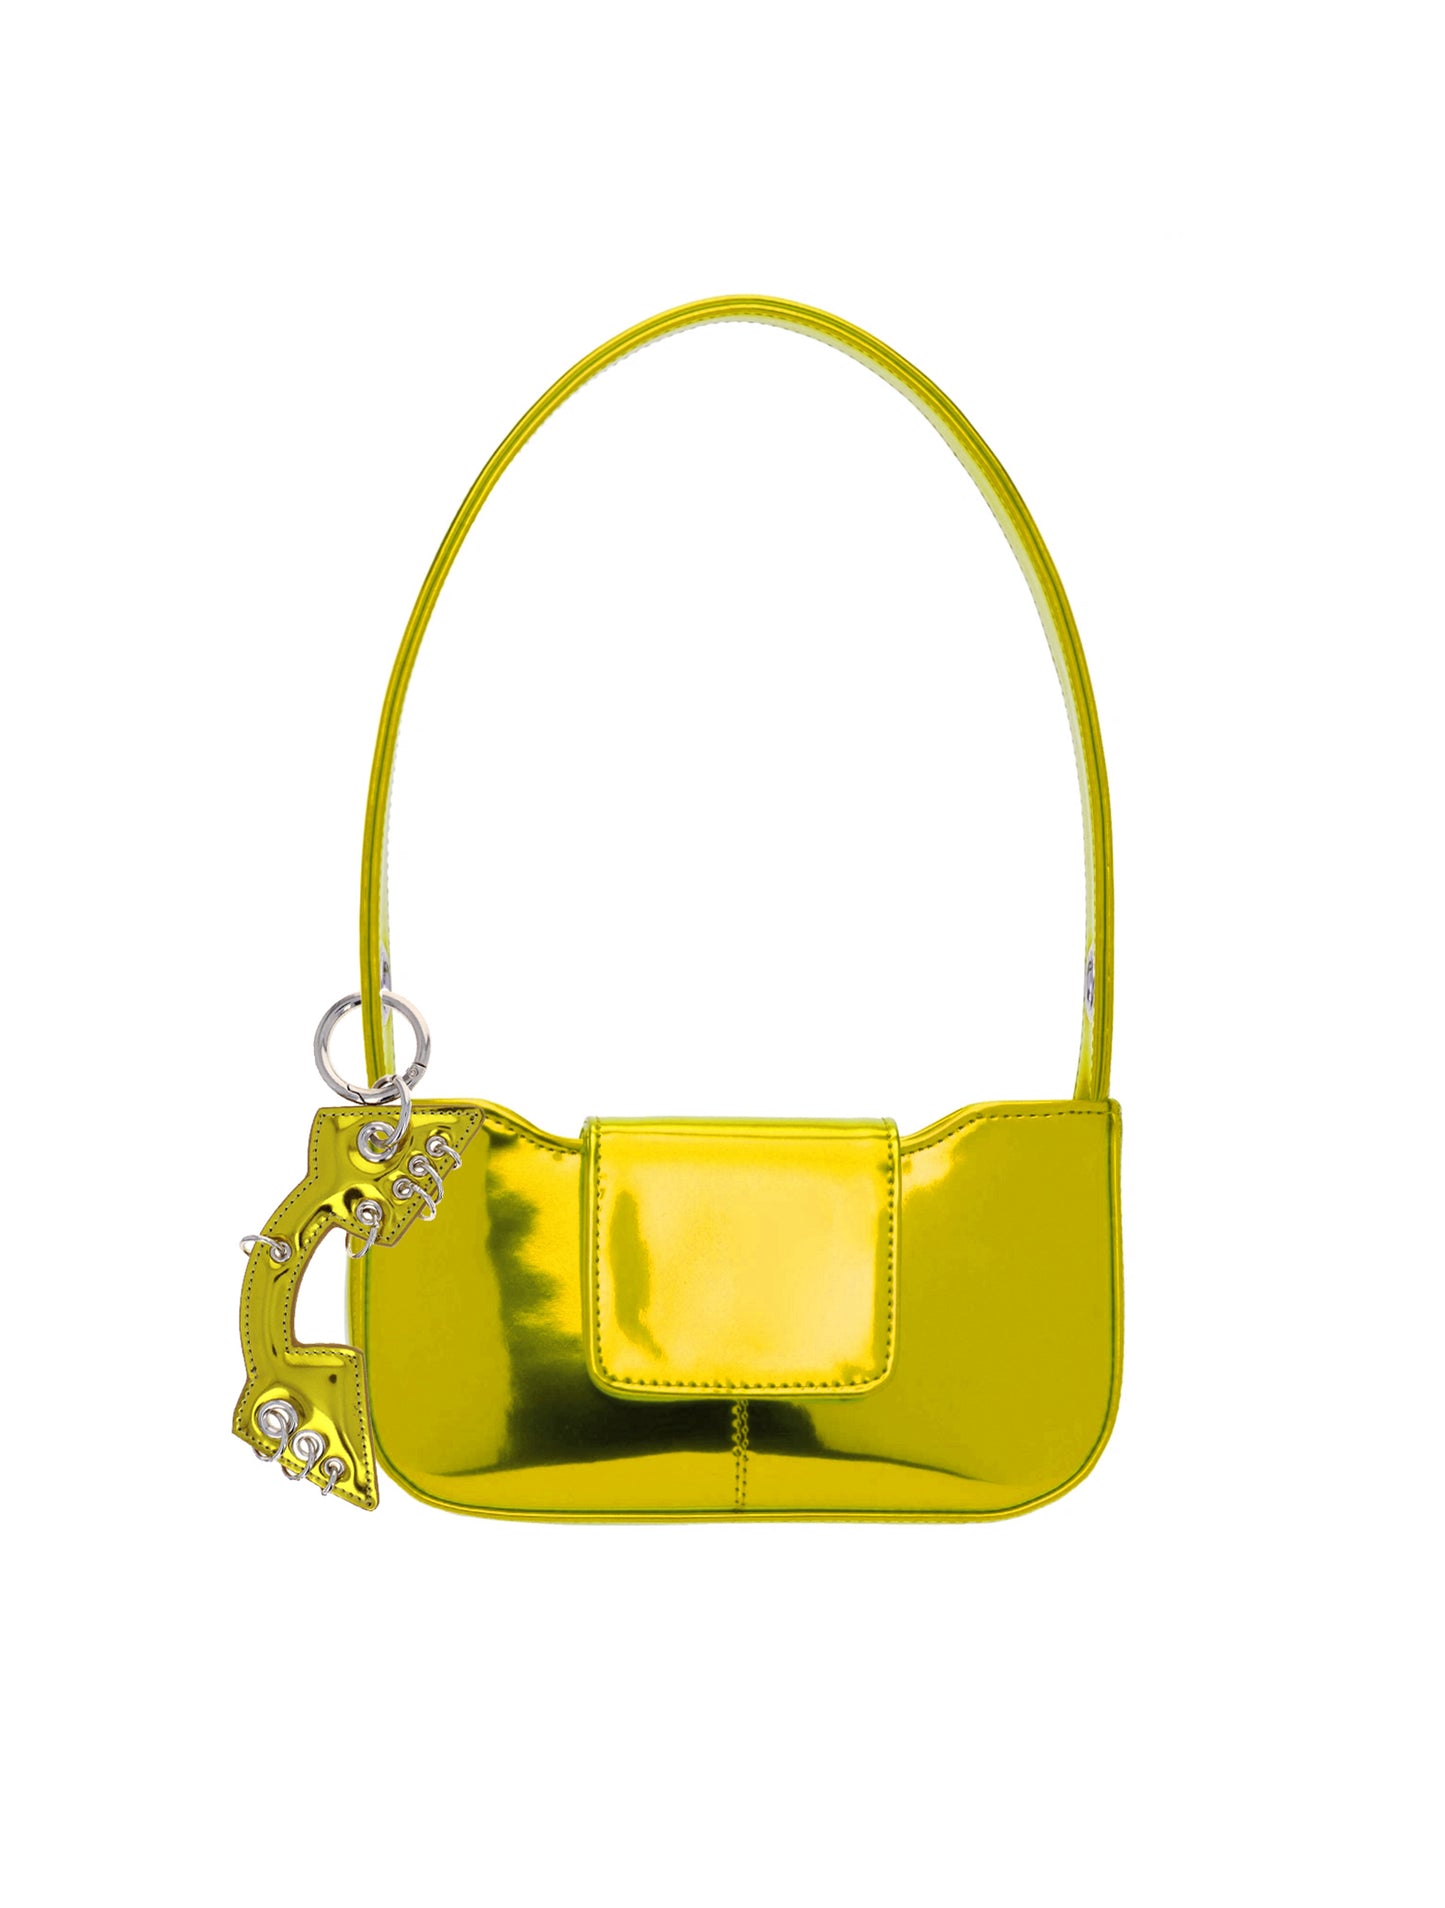 Justine Clenquet Dylan Metallic Yellow Bag